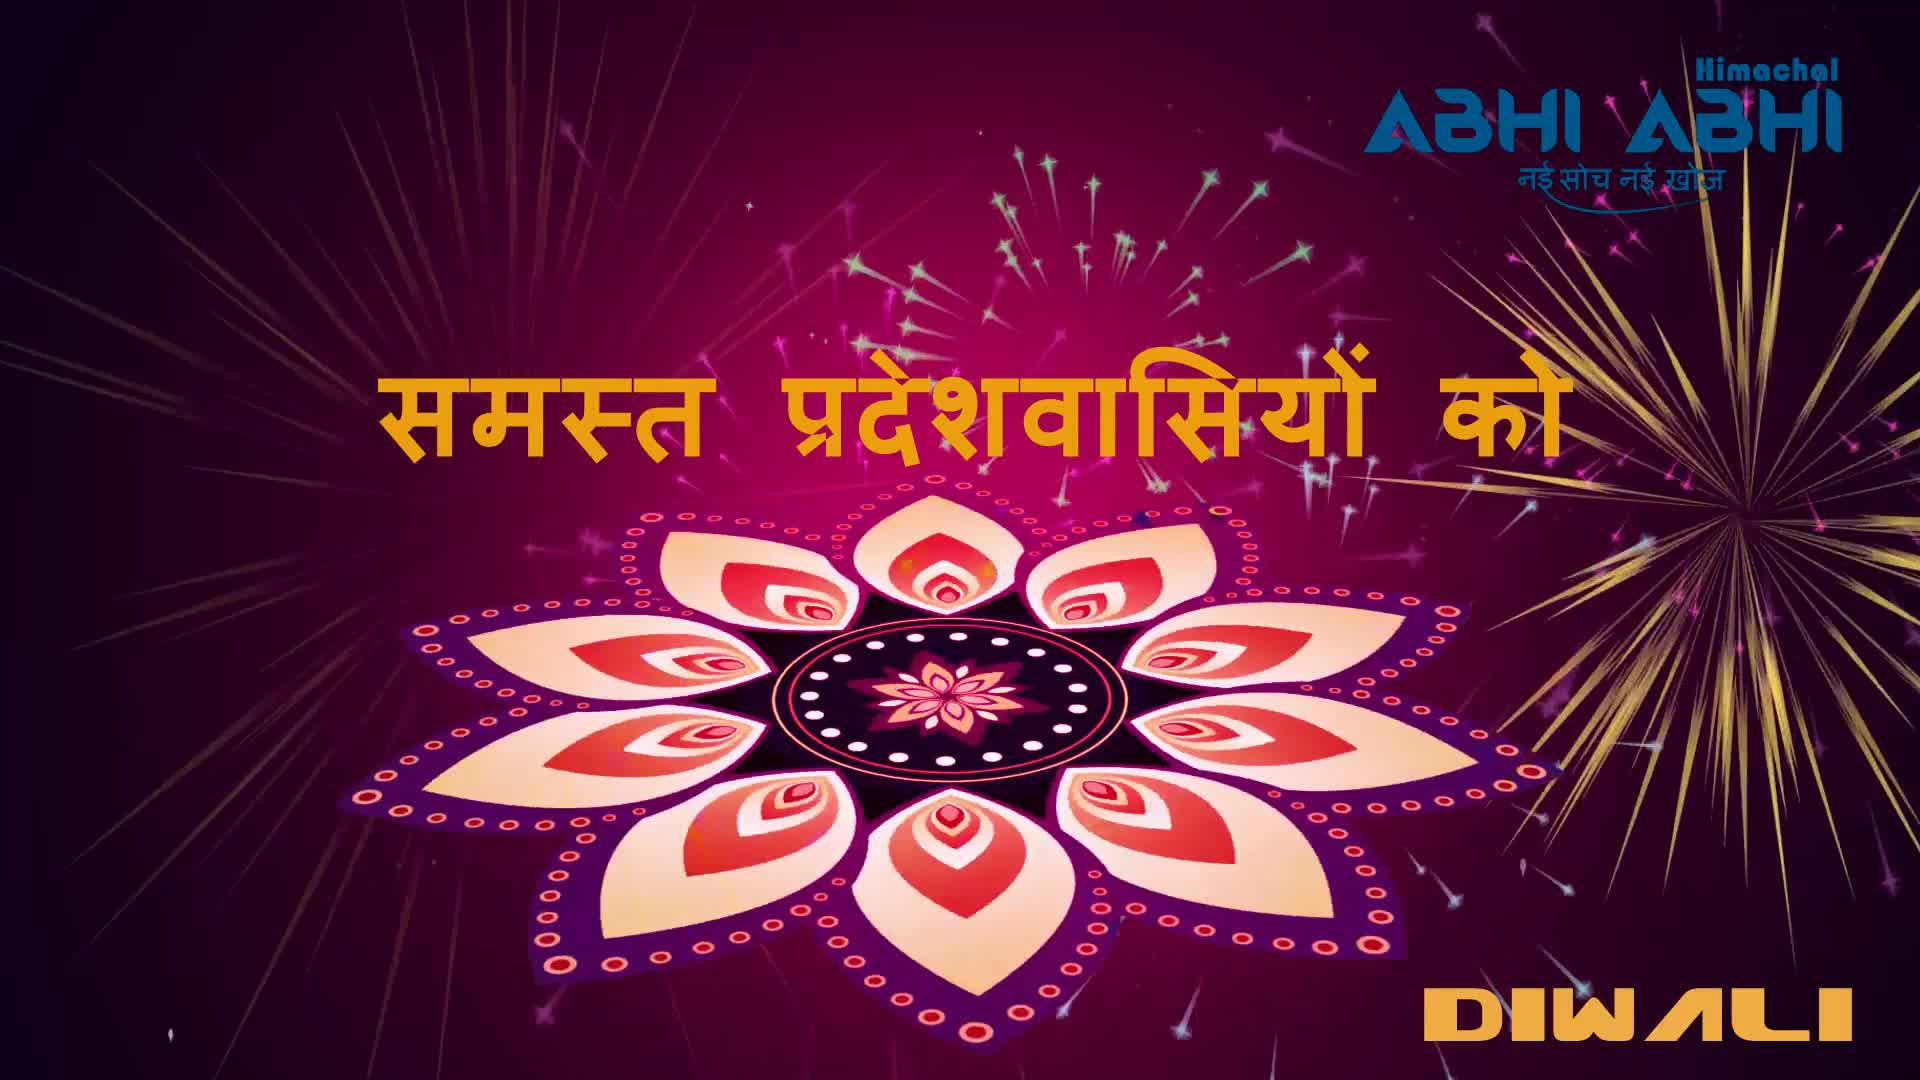 Himachal Abhi Abhi Diwali Wishes